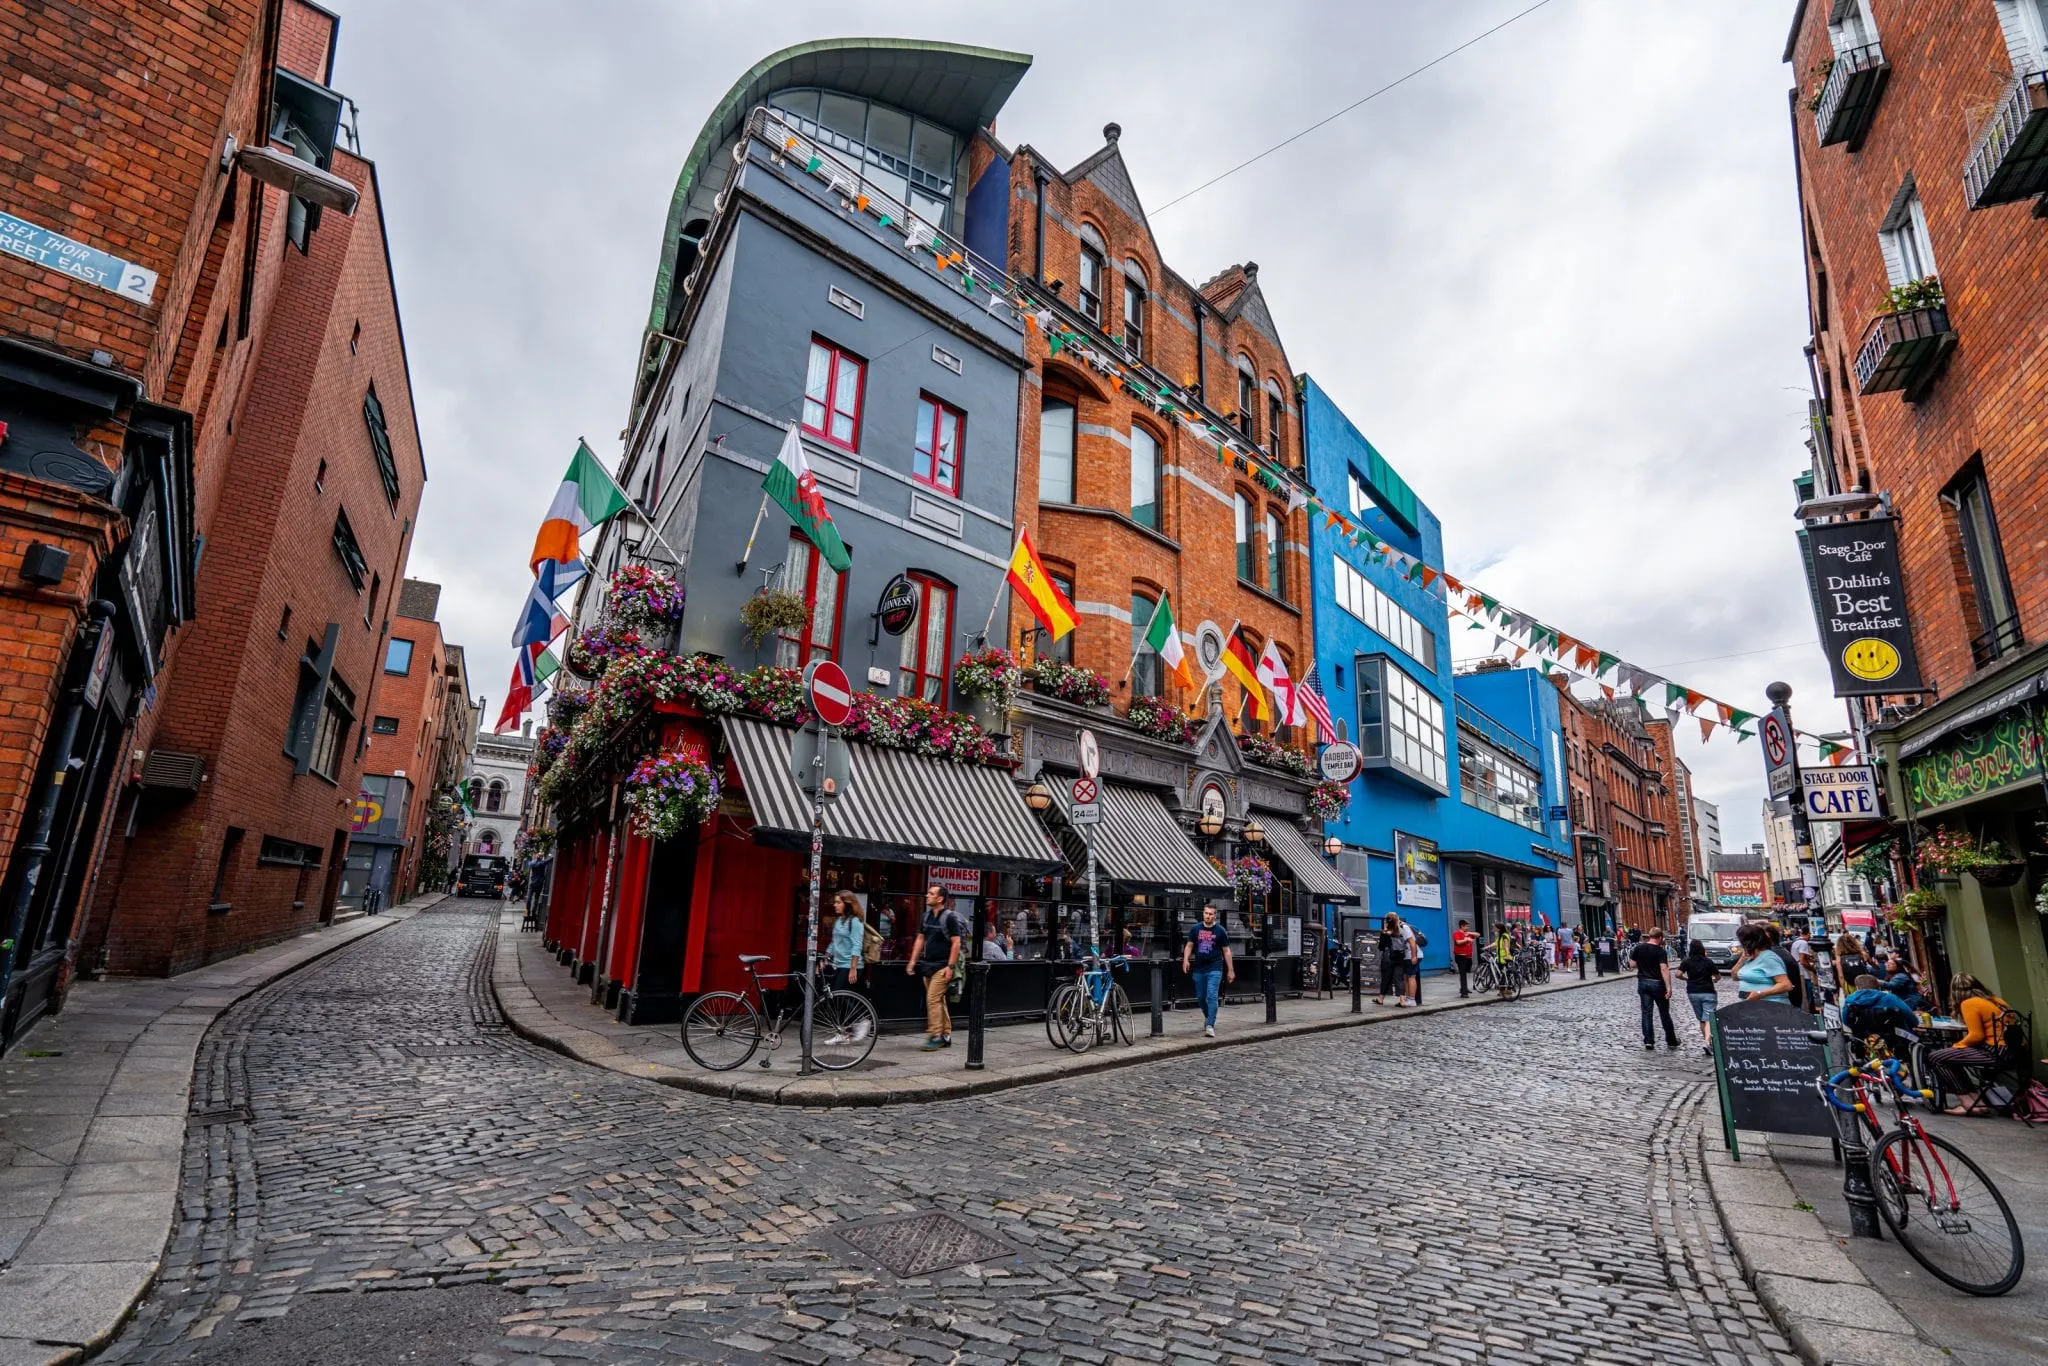 Cobblestone streets surrounding colorful buildings in Dublin Ireland